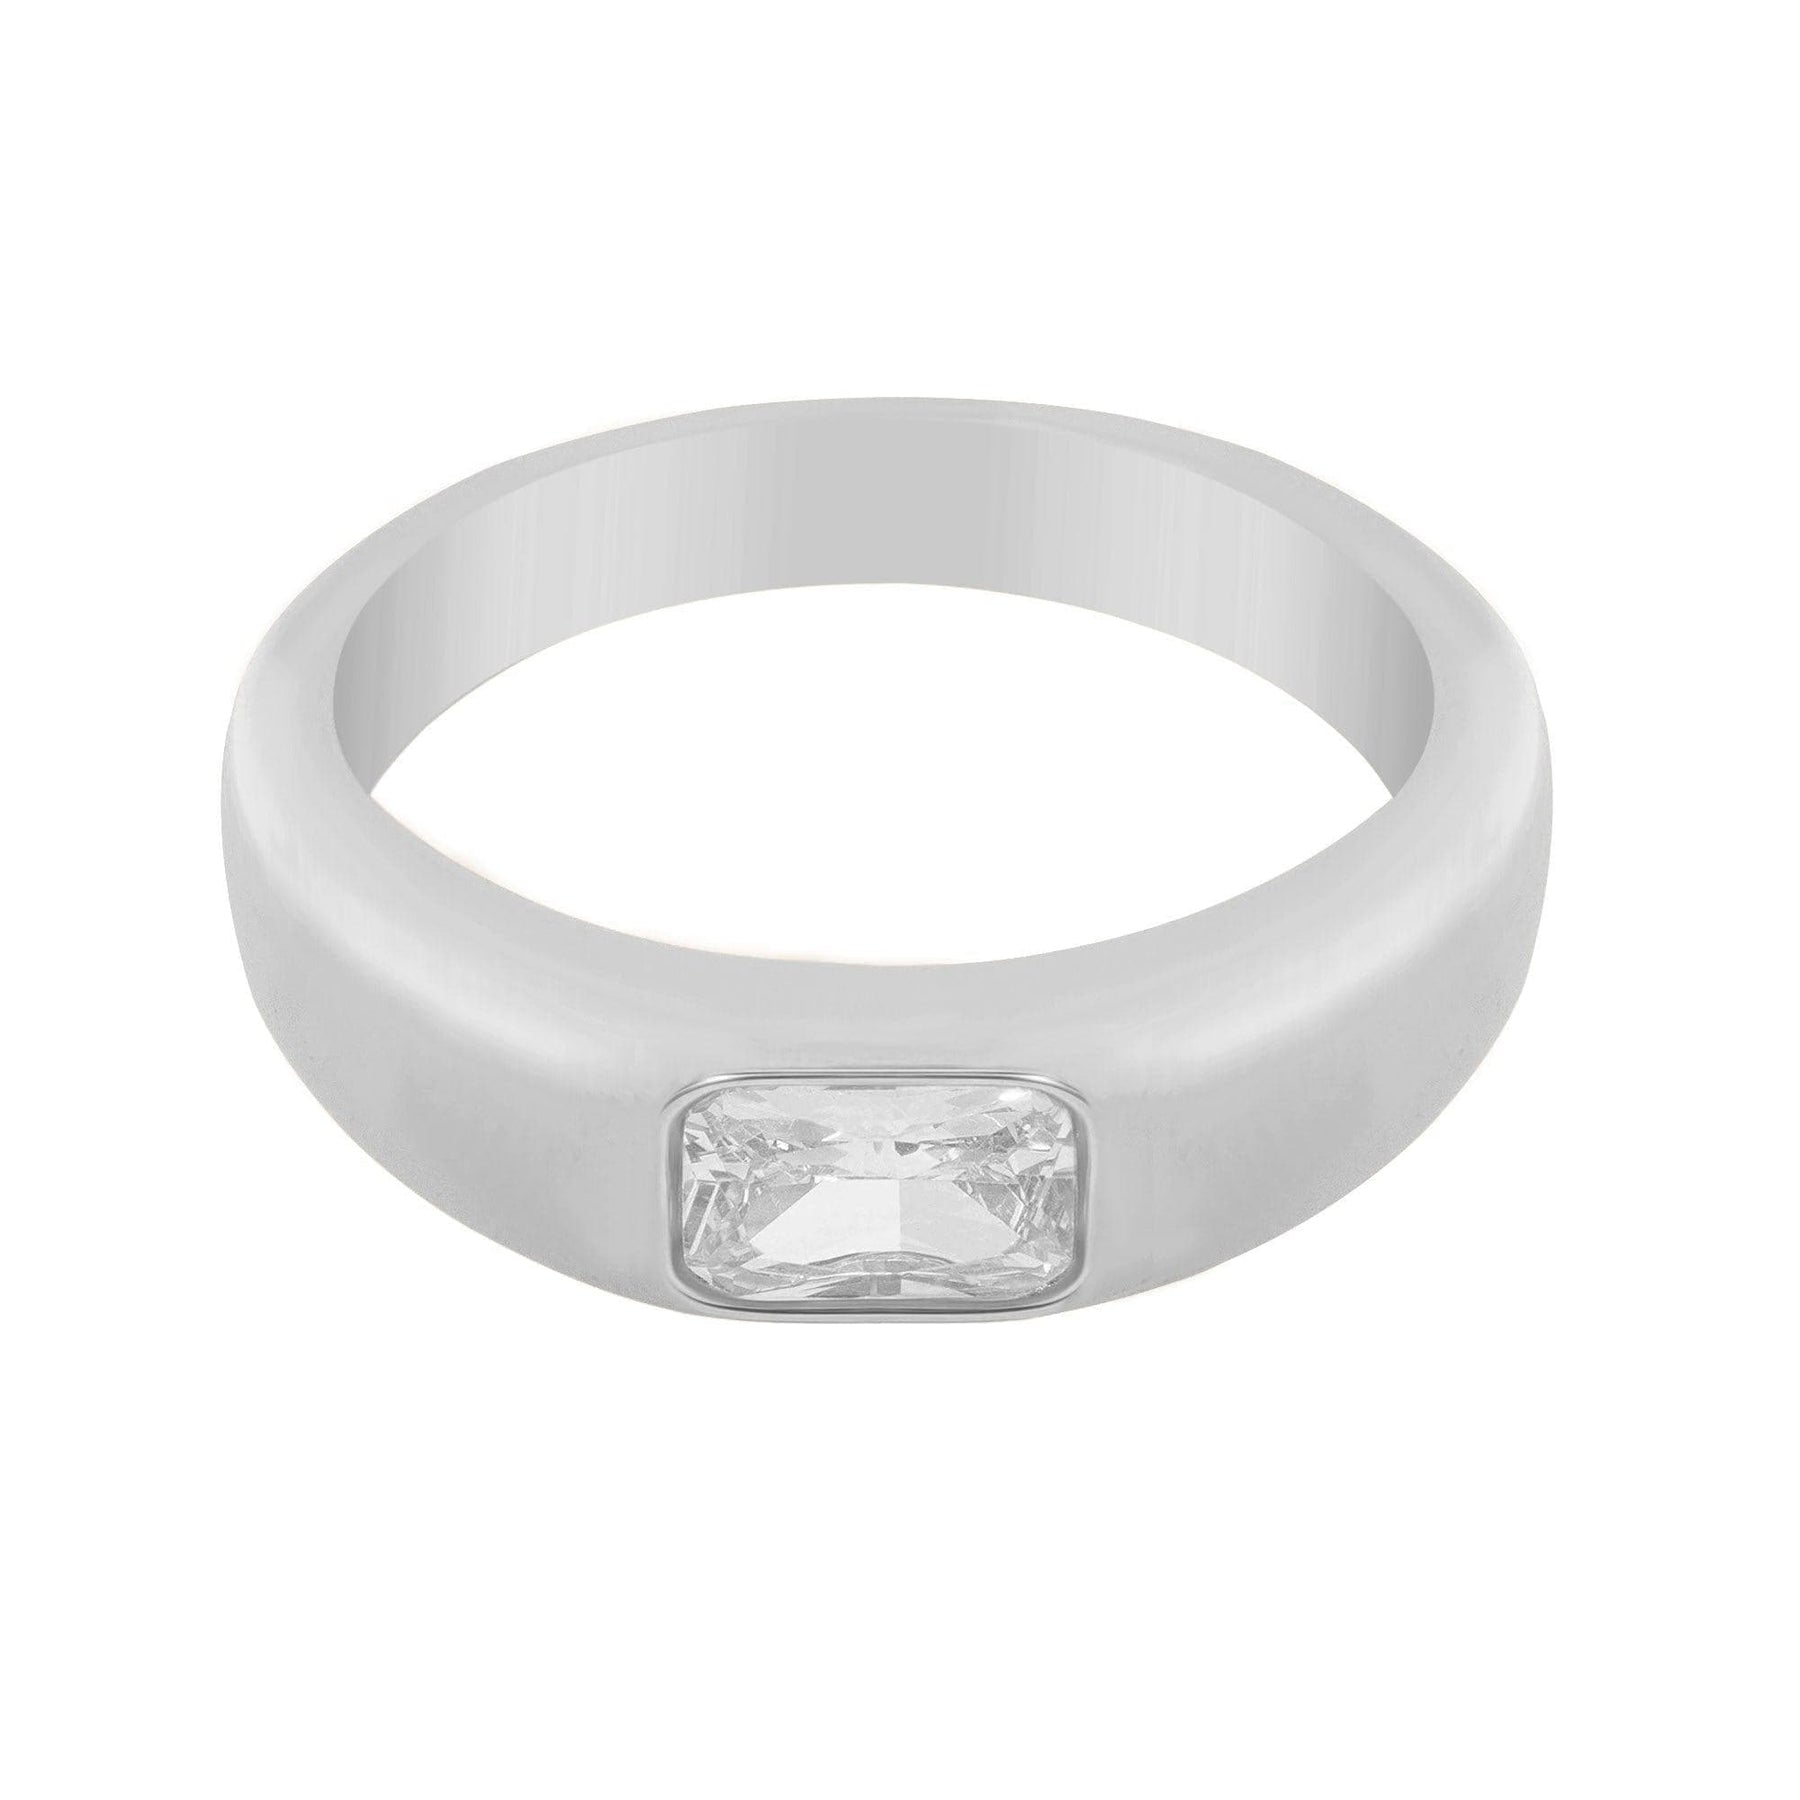 BohoMoon Stainless Steel Wren Ring Silver / US 5 / UK J / EUR 49 (x small)